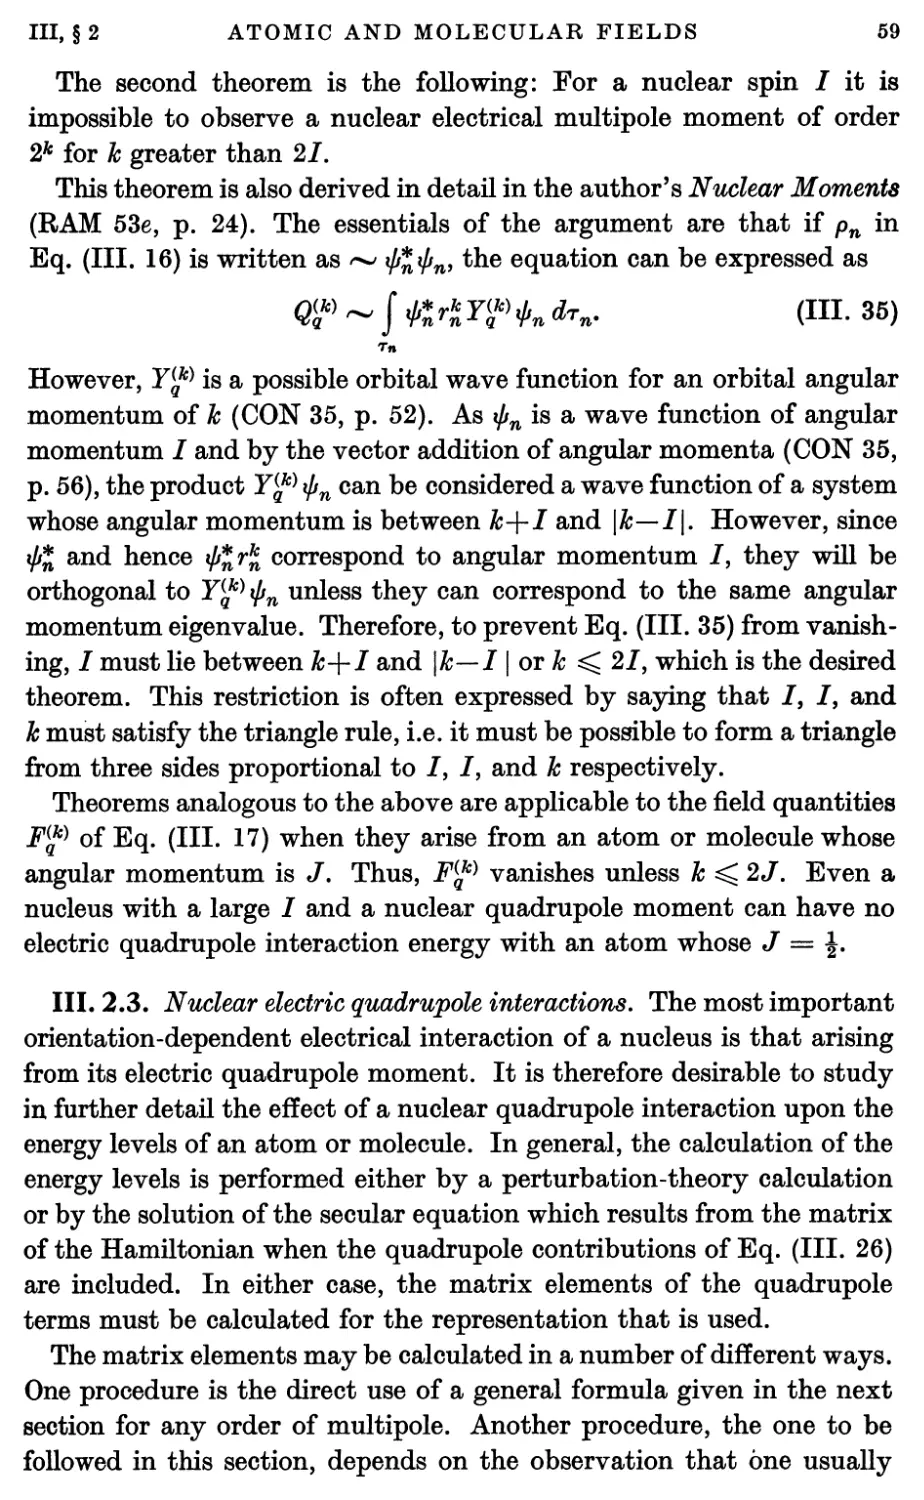 III.2.3. Nuclear electric quadrupole interactions